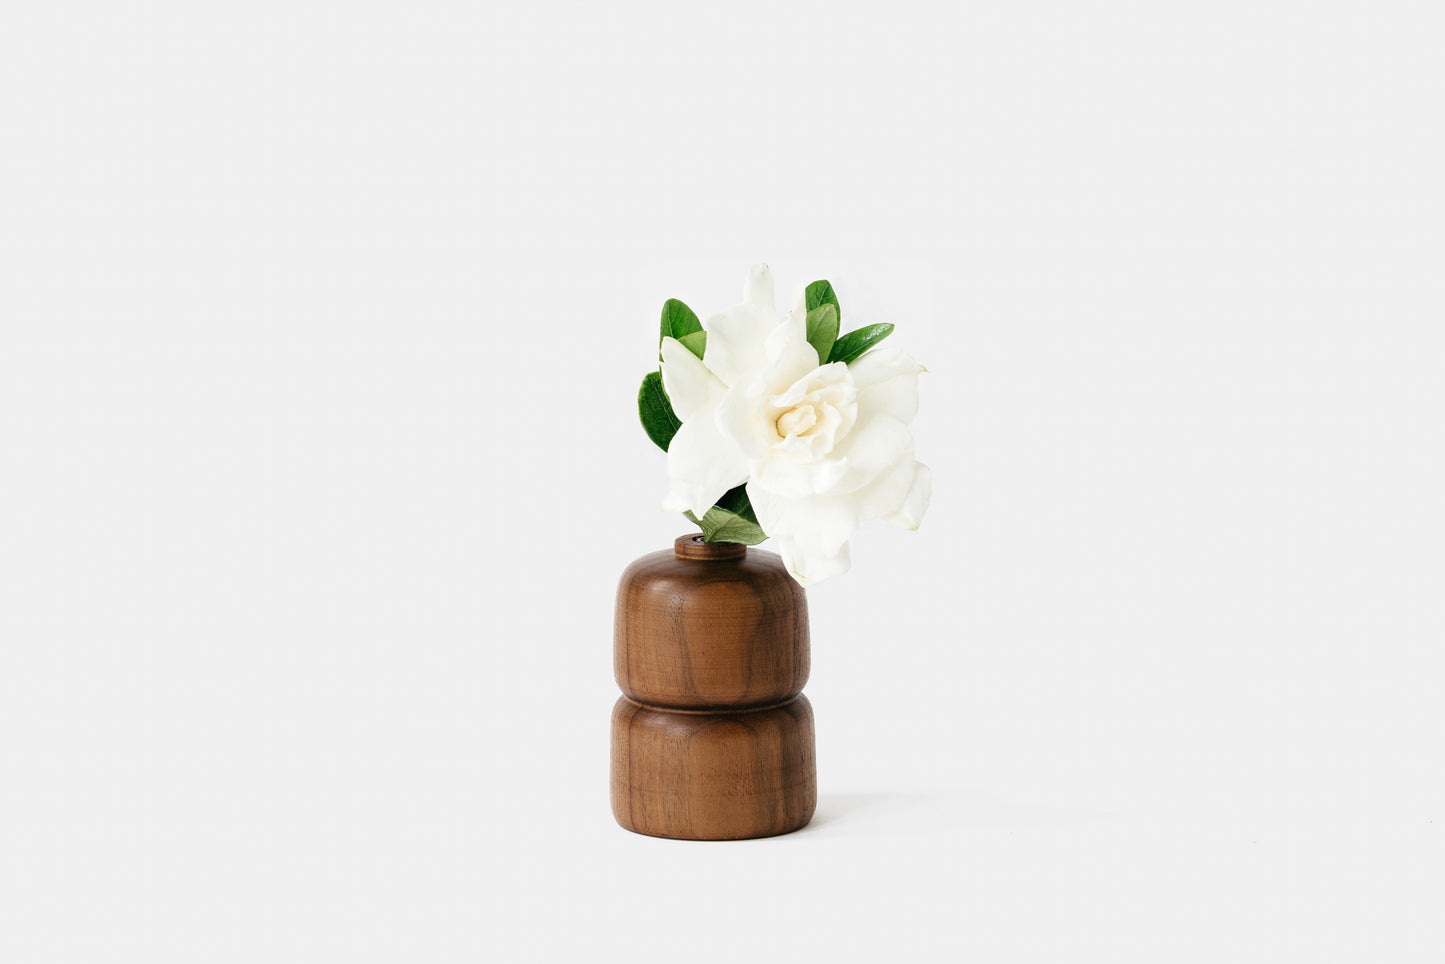 Grooved walnut bud vase holding white rose. By Melanie Abrantes Designs